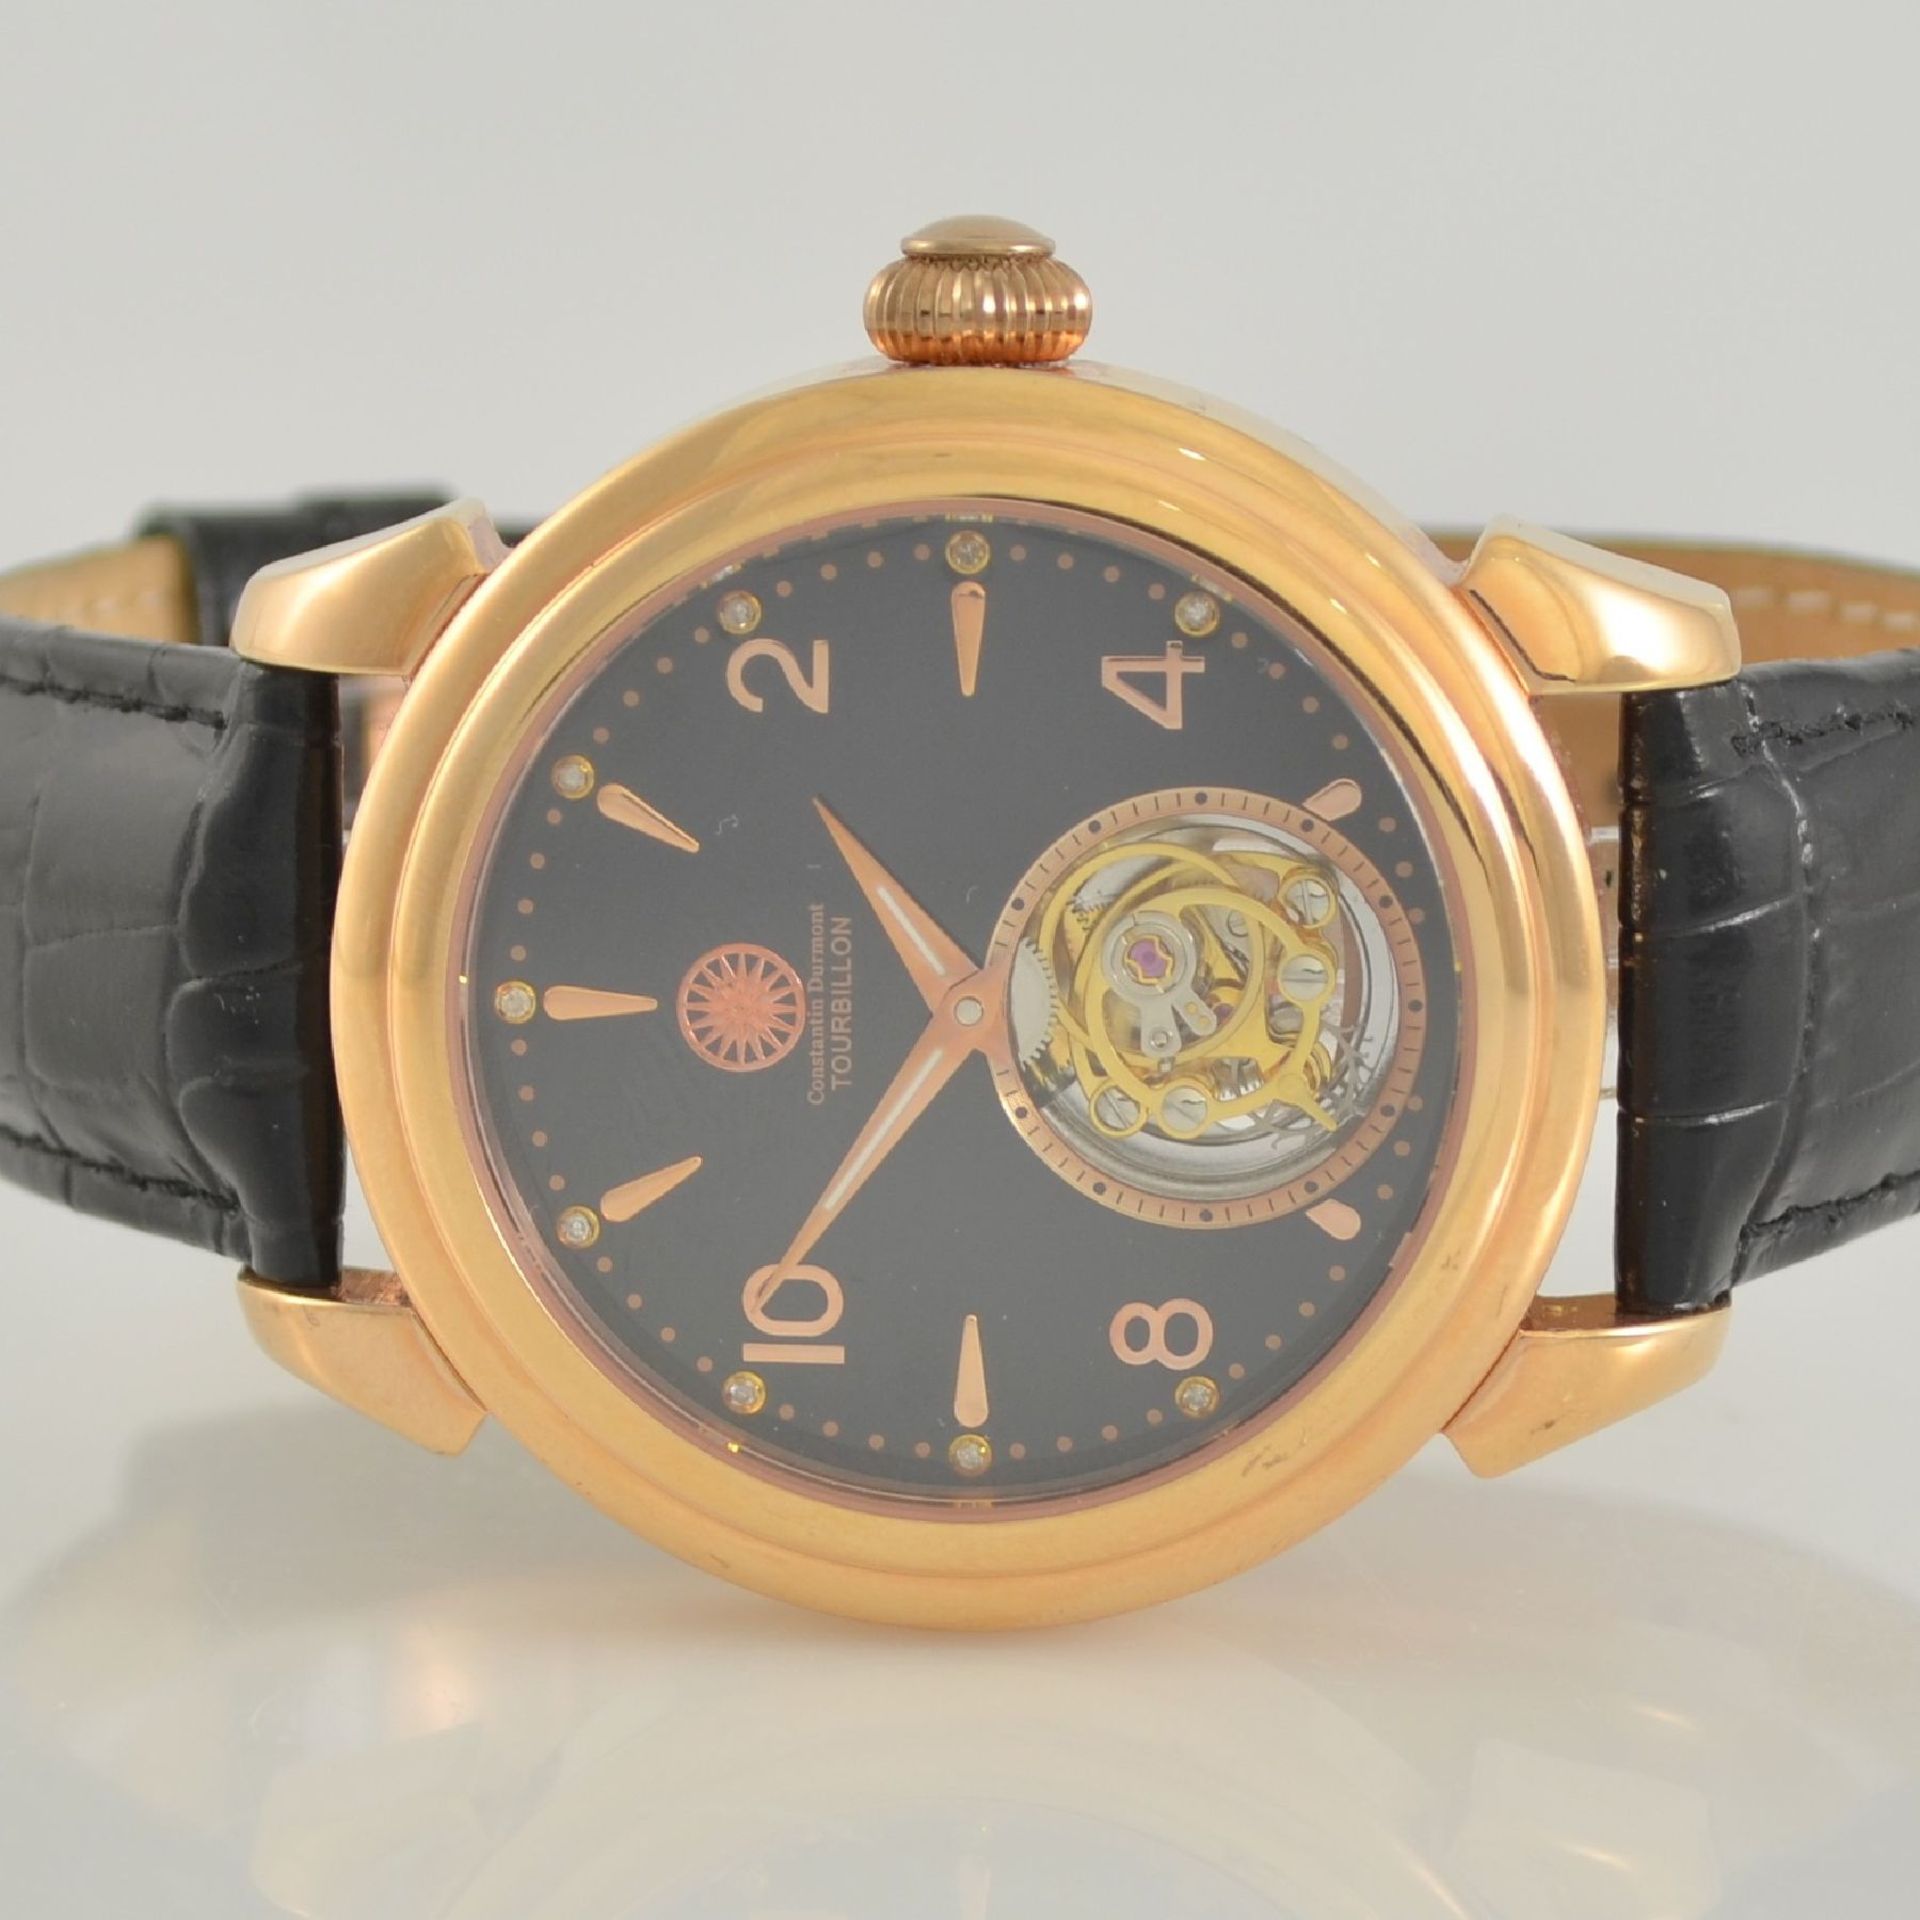 CONSTANTIN DURMONT tourbillon wristwatch, around 2010, manual winding, gold-plated case on both - Bild 2 aus 5